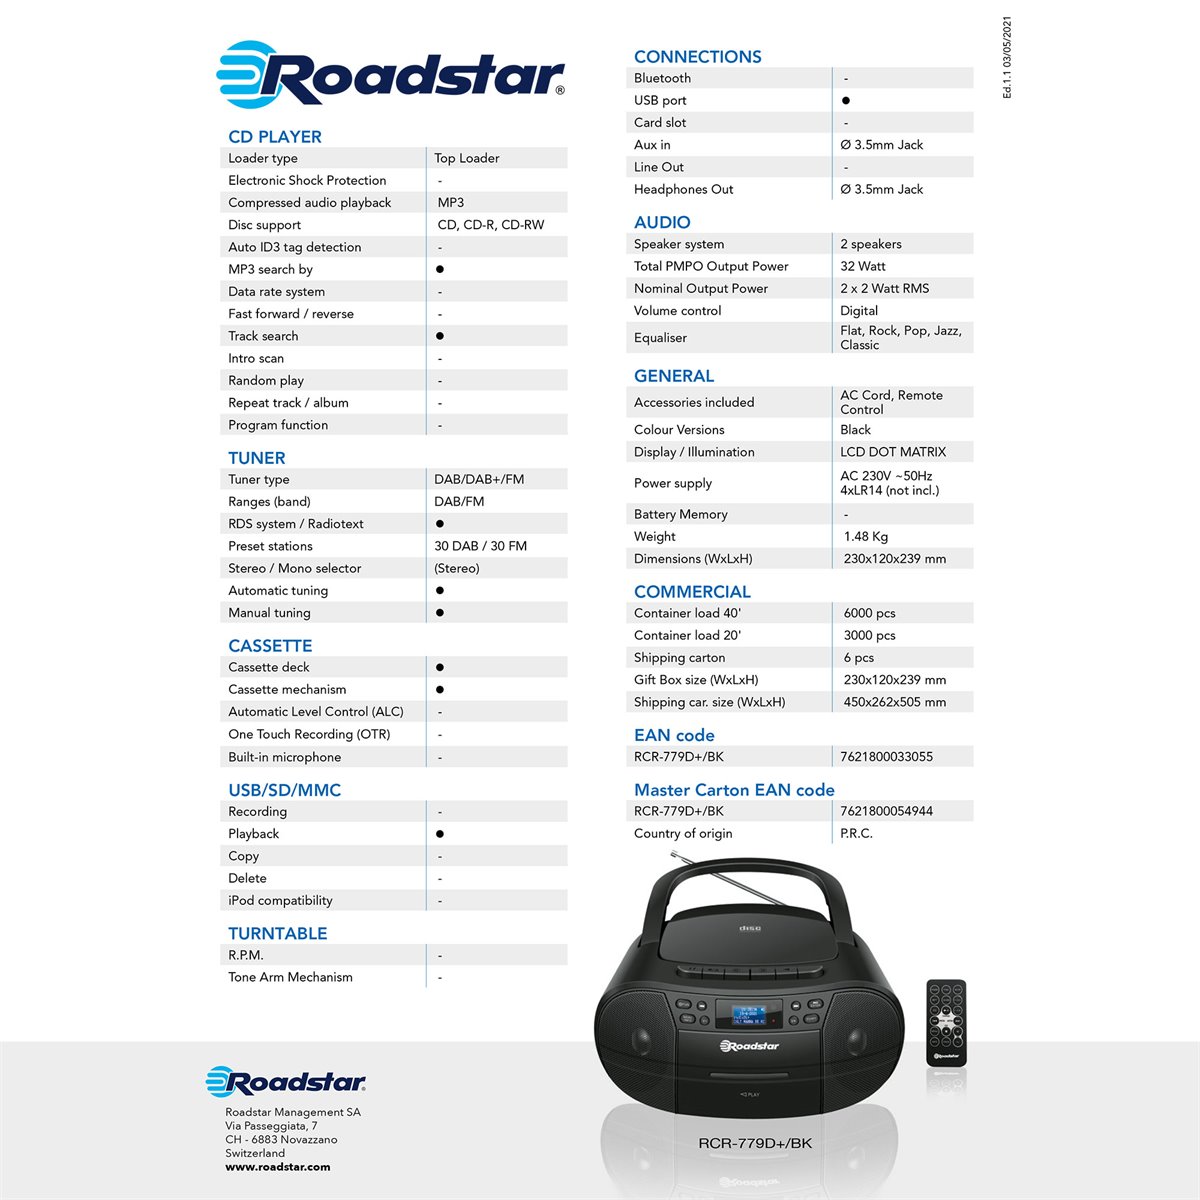 Roadstar RCR-4635UMP/BK Radio CD Portátil Cassette, Radio Digital PLL FM,  Boombox Reproductor CD-MP3, USB, AUX-IN, Salida de Auriculares, Negro